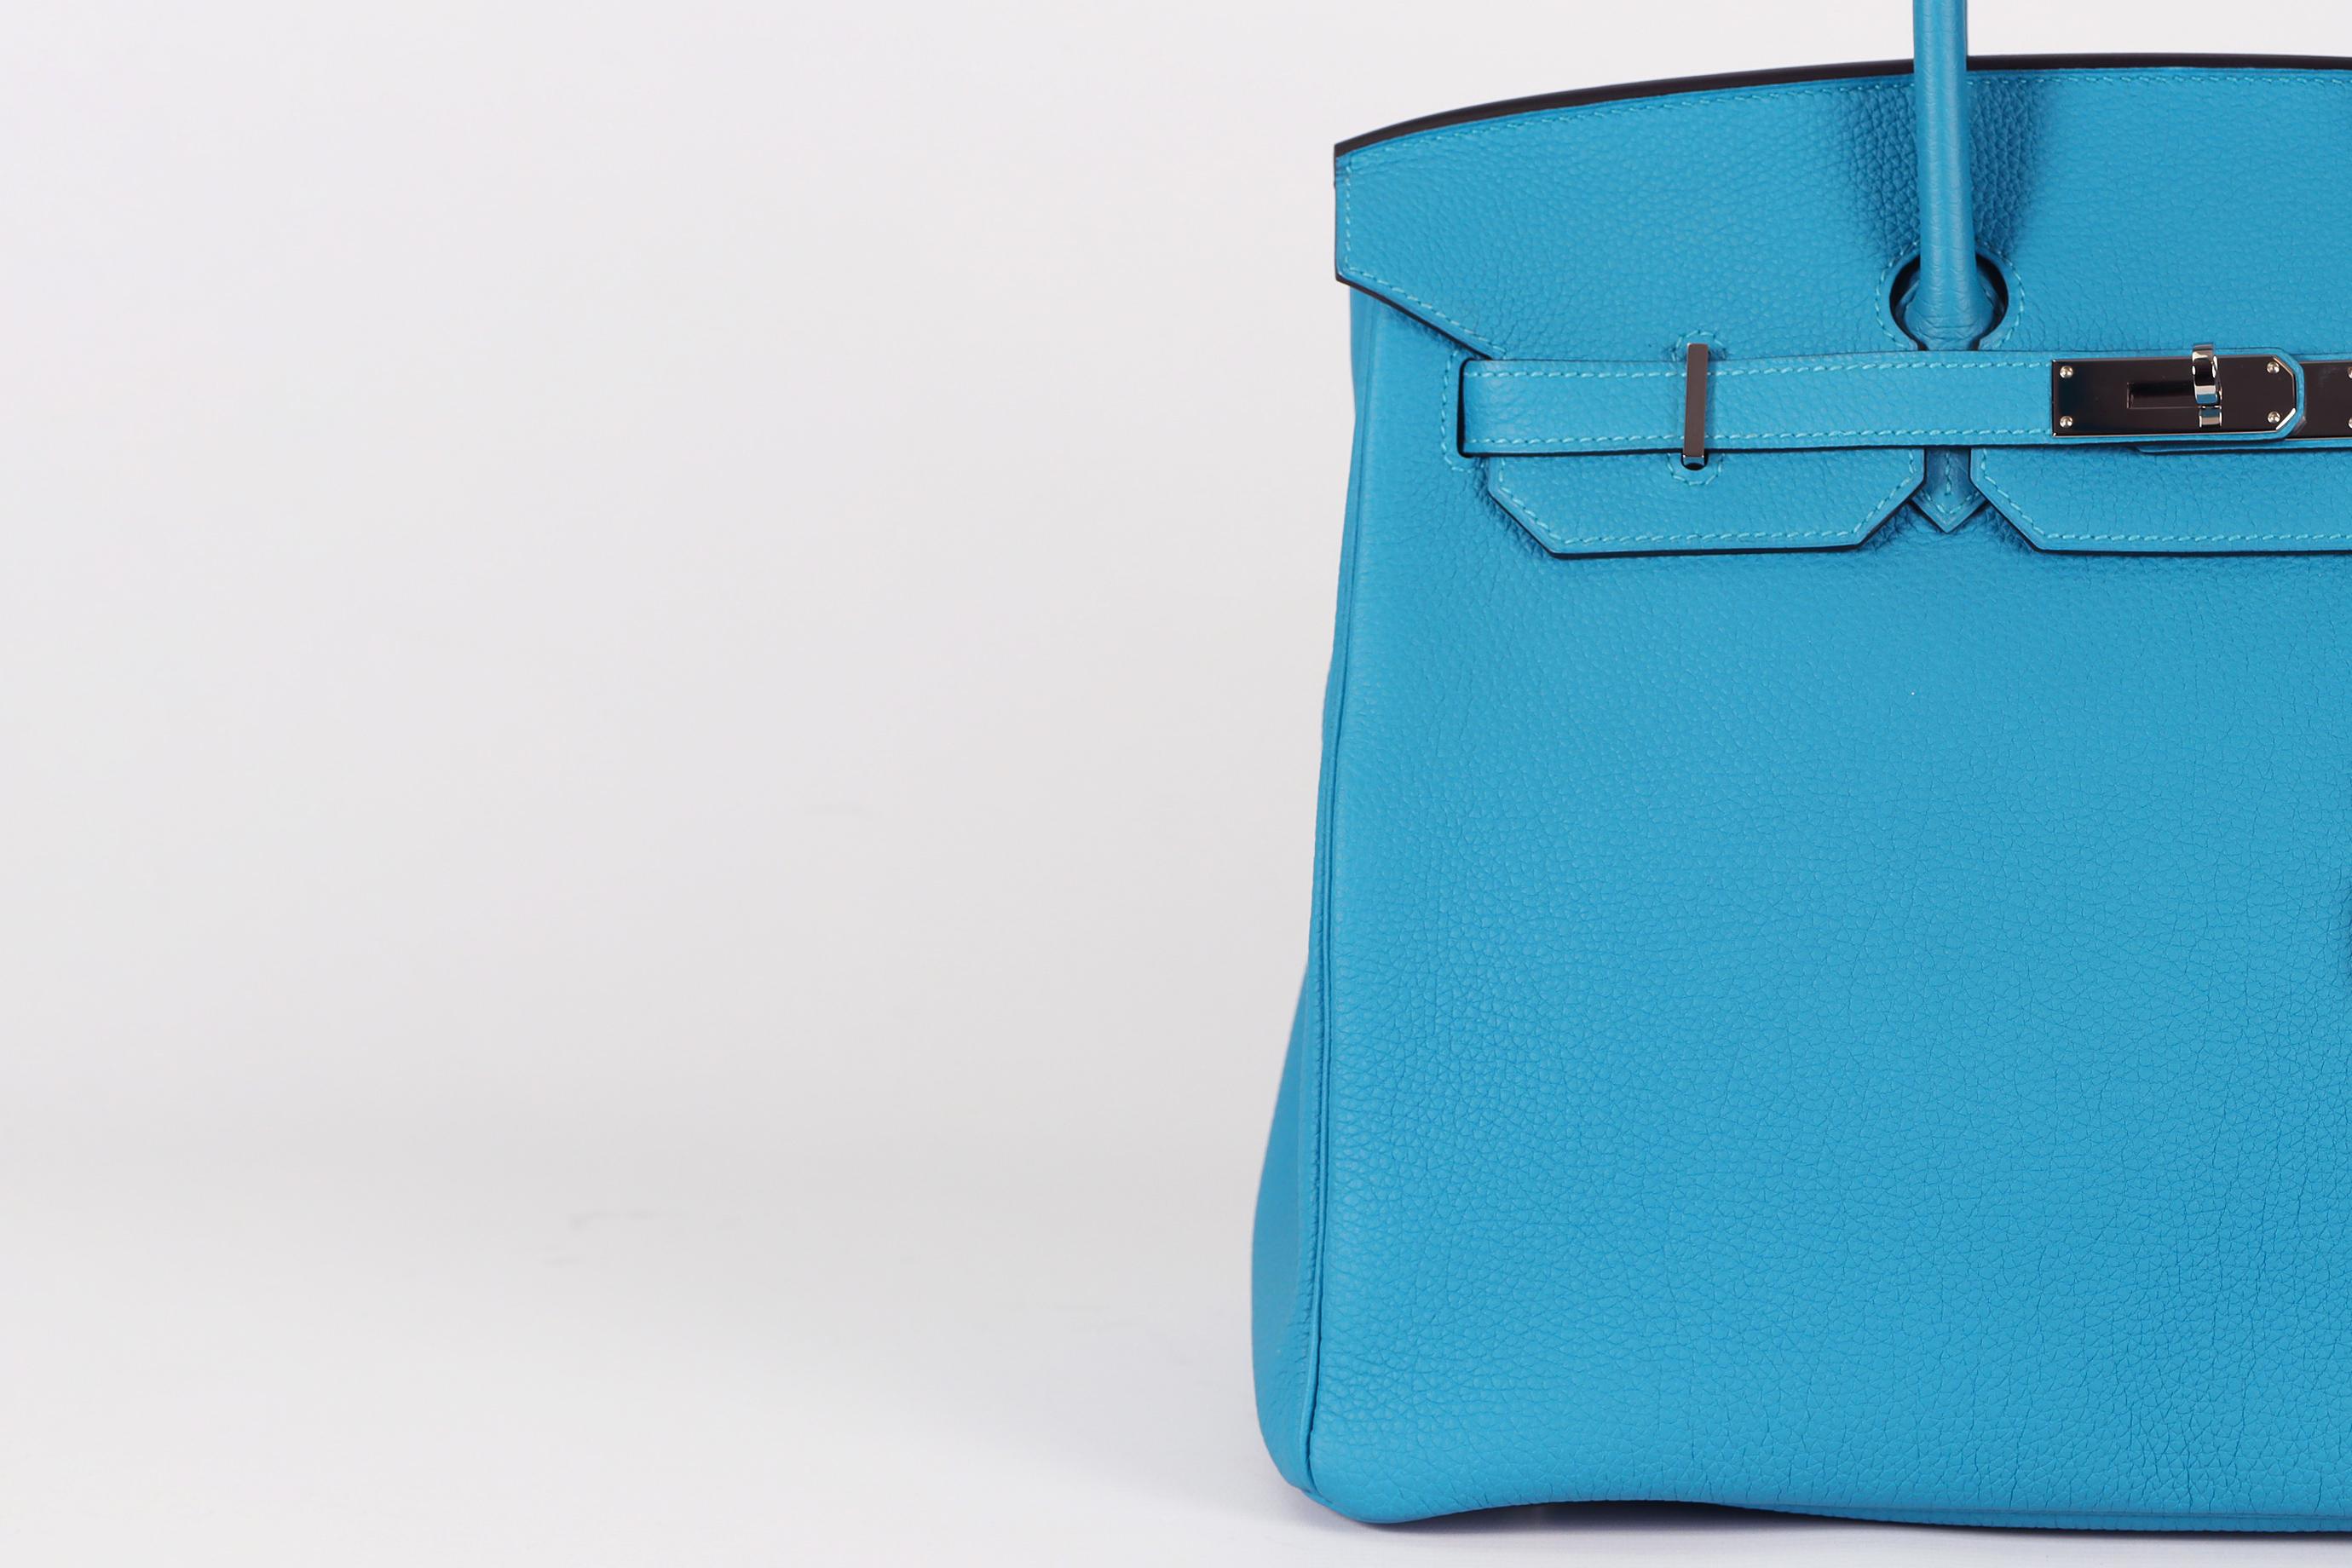 Hermès 2014 Birkin 35cm Togo Leather Bag For Sale 8